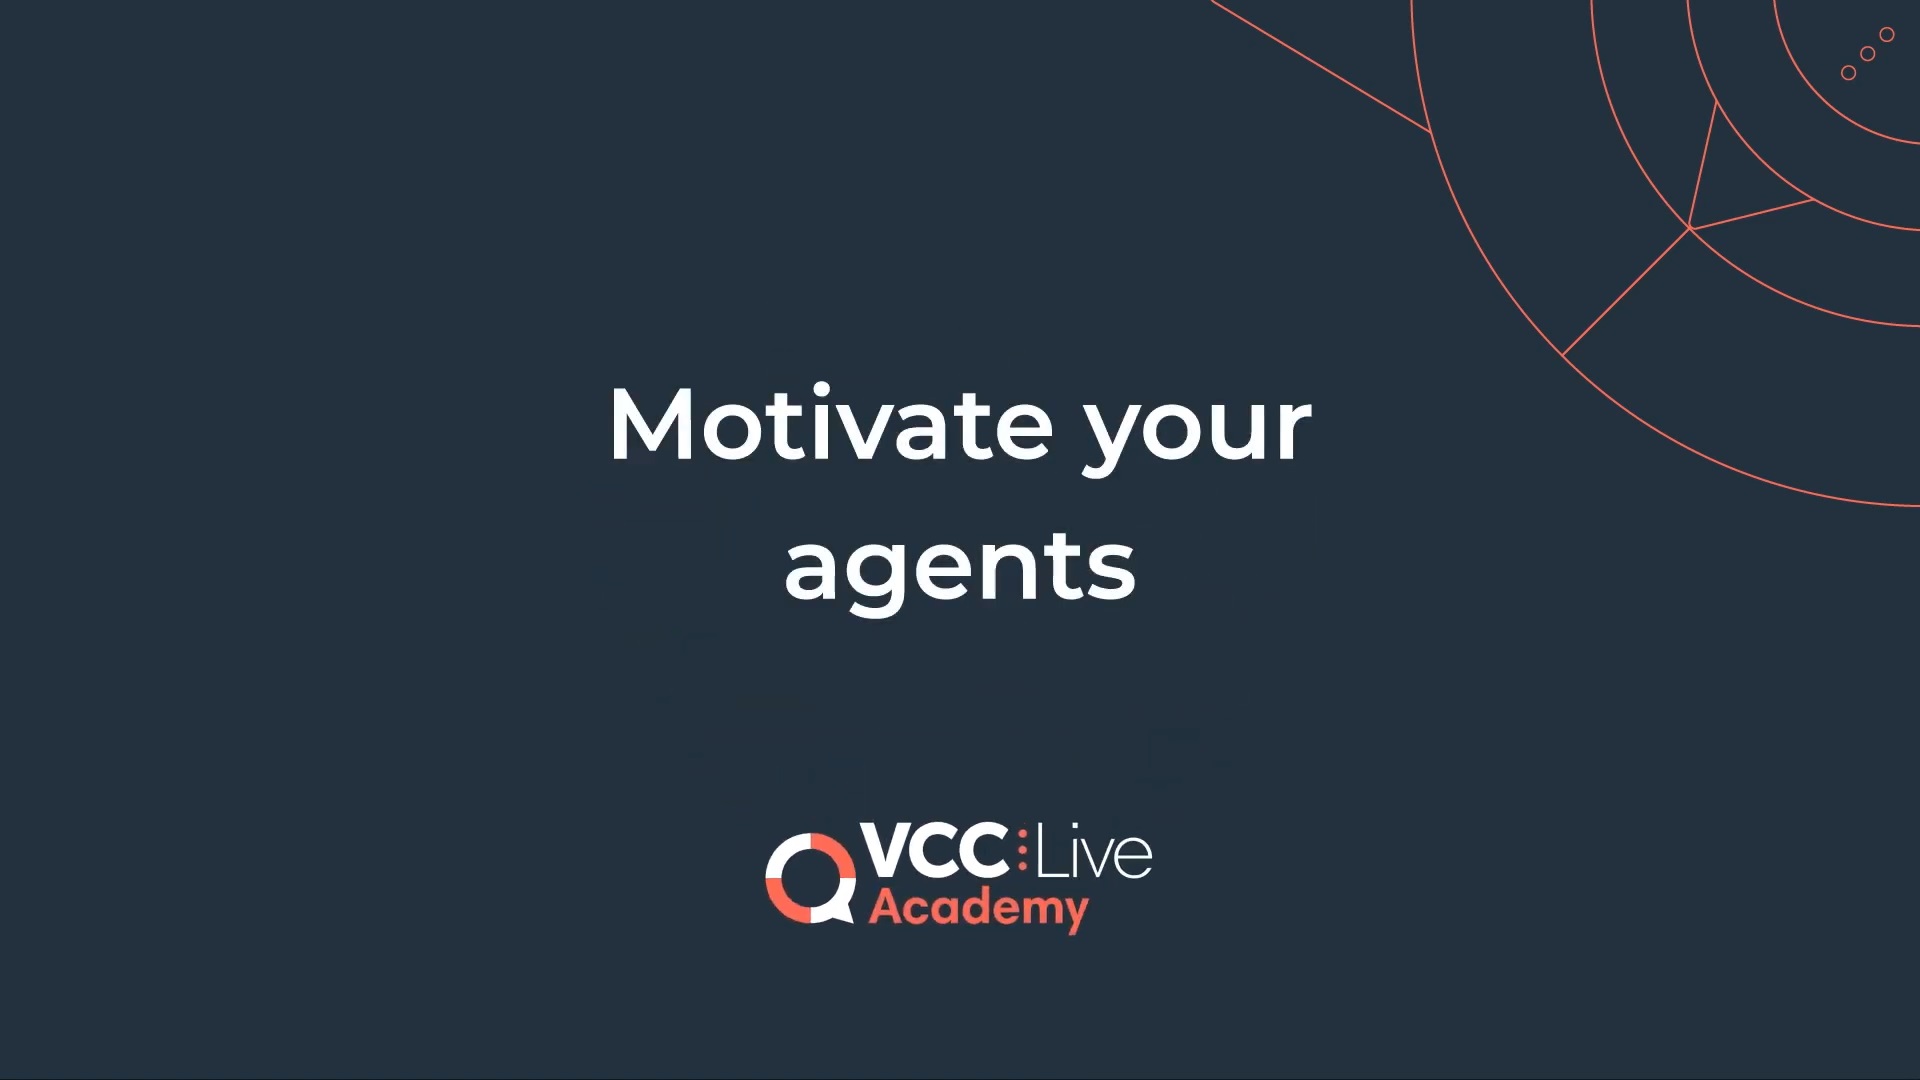 https://vcc.live/wp-content/uploads/2022/08/remote-agents-course-motivate-agents.jpg